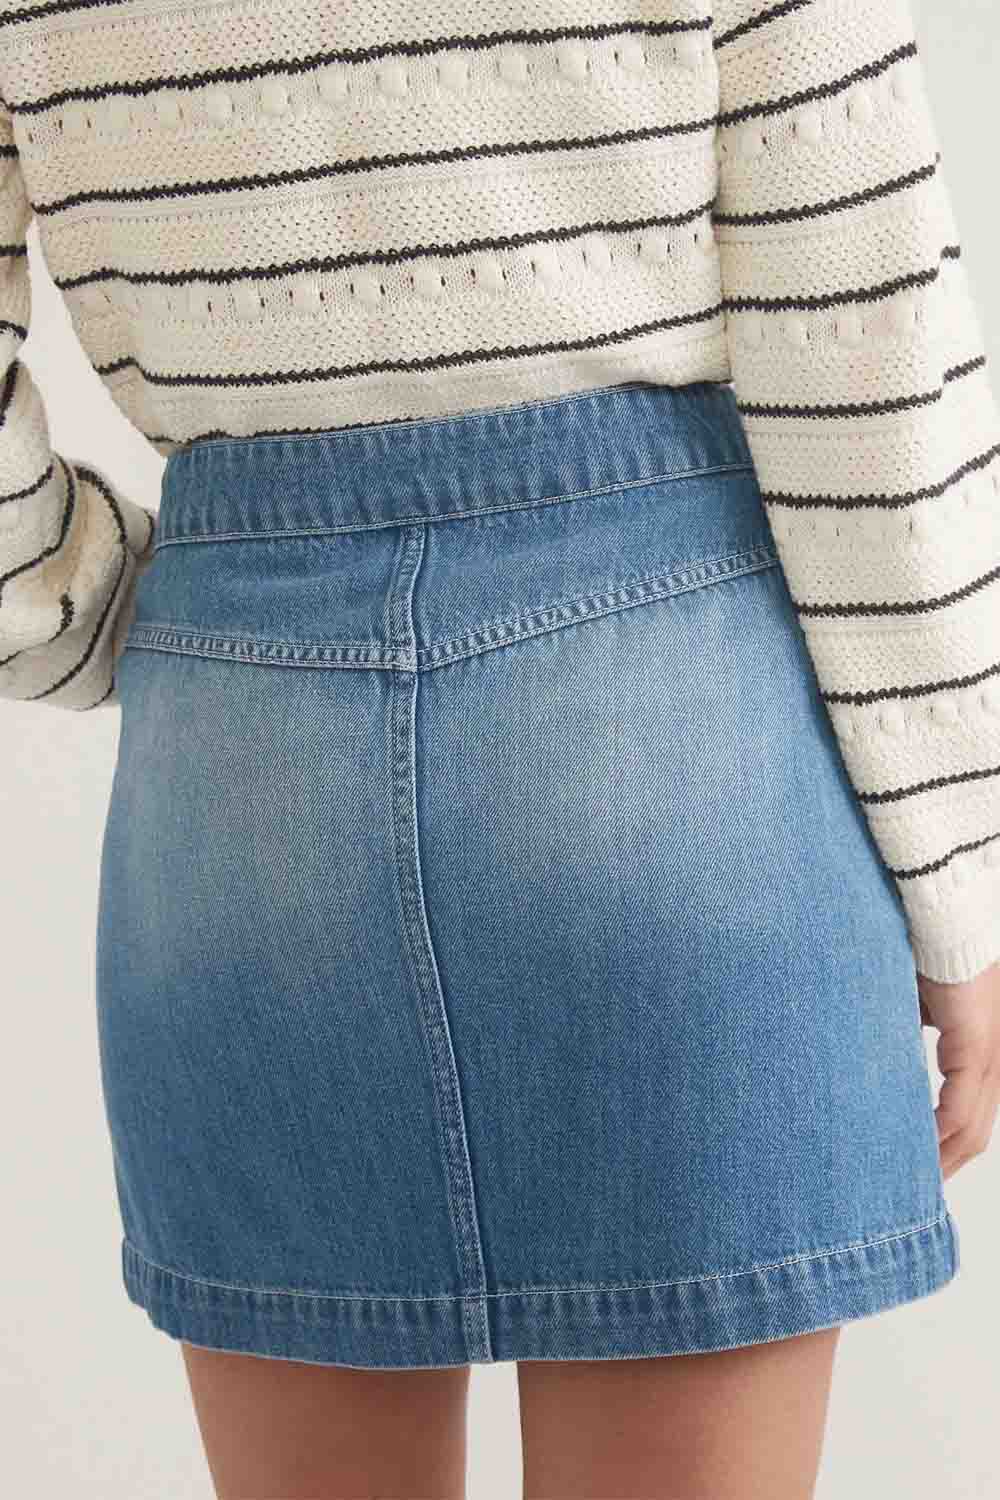 Marine Layer - Emilia Mini Skirt - Medium Wash - Back